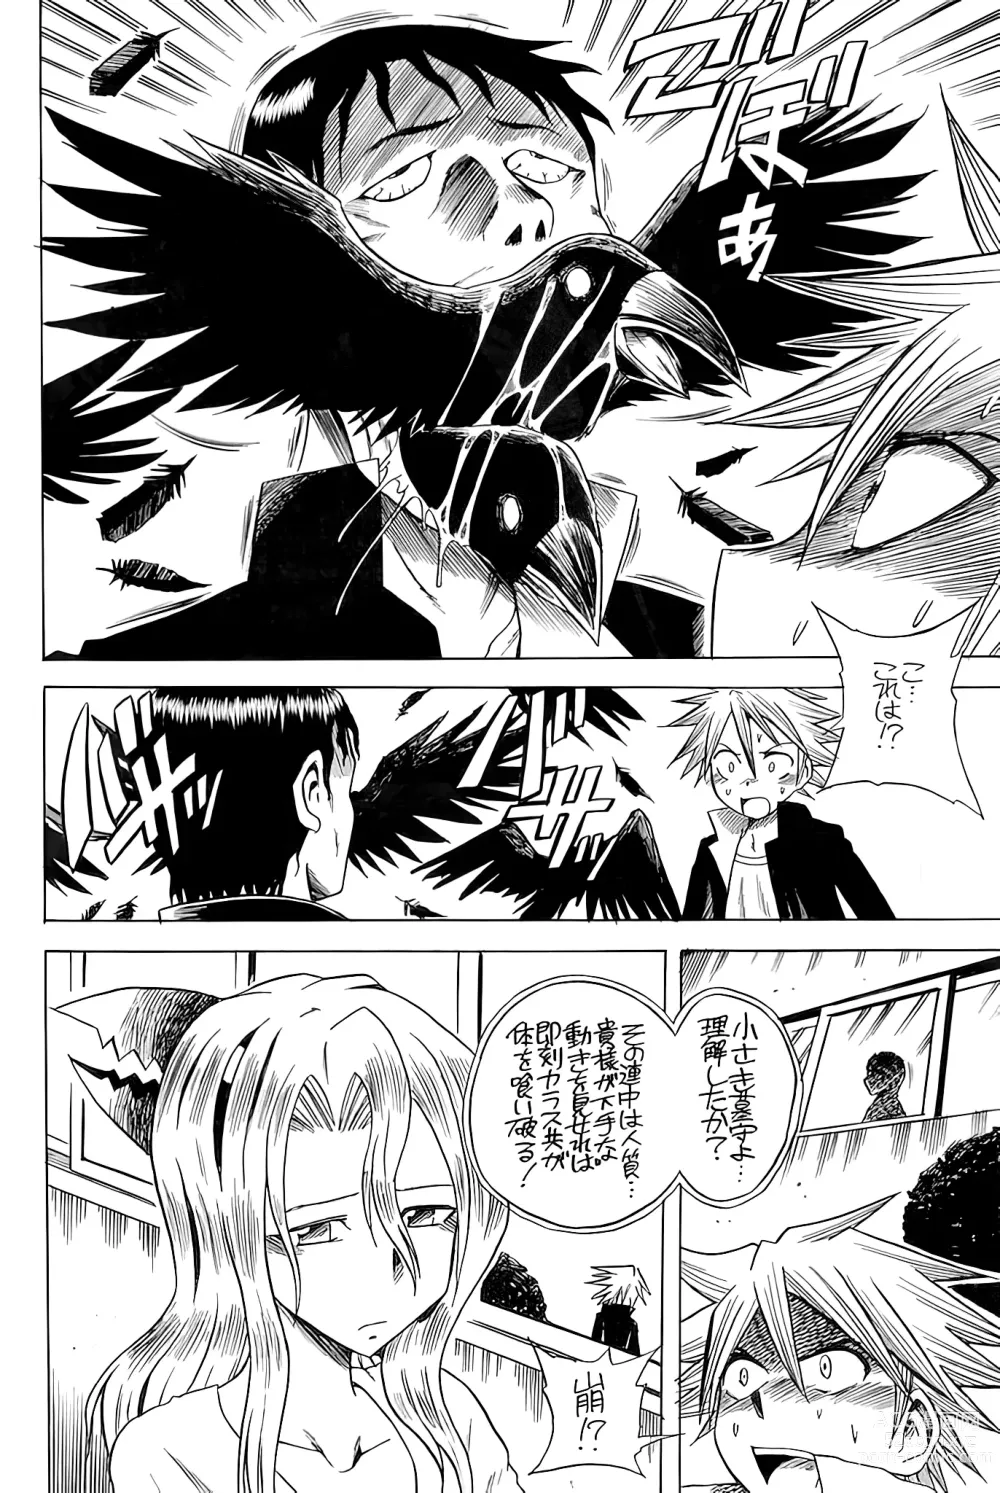 Page 5 of doujinshi Hakamori Breaker